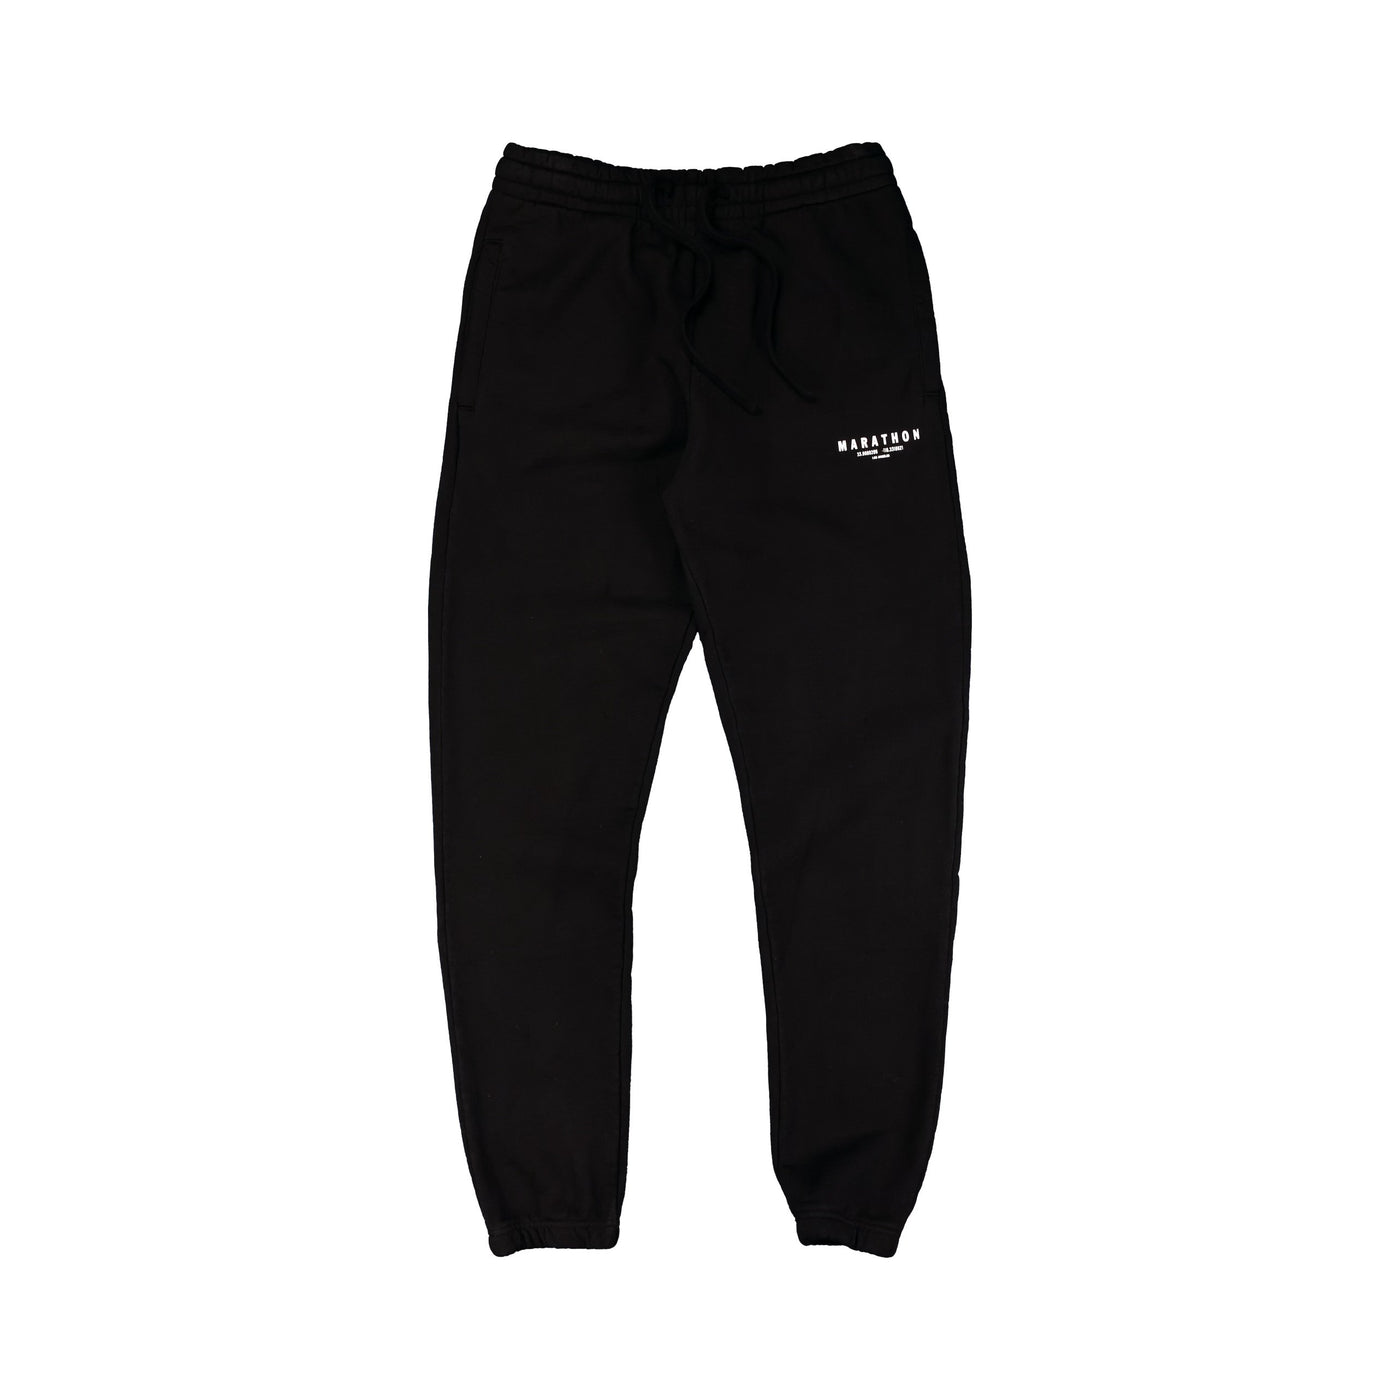 Marathon Foundation Sweatpants - Black/White - Front